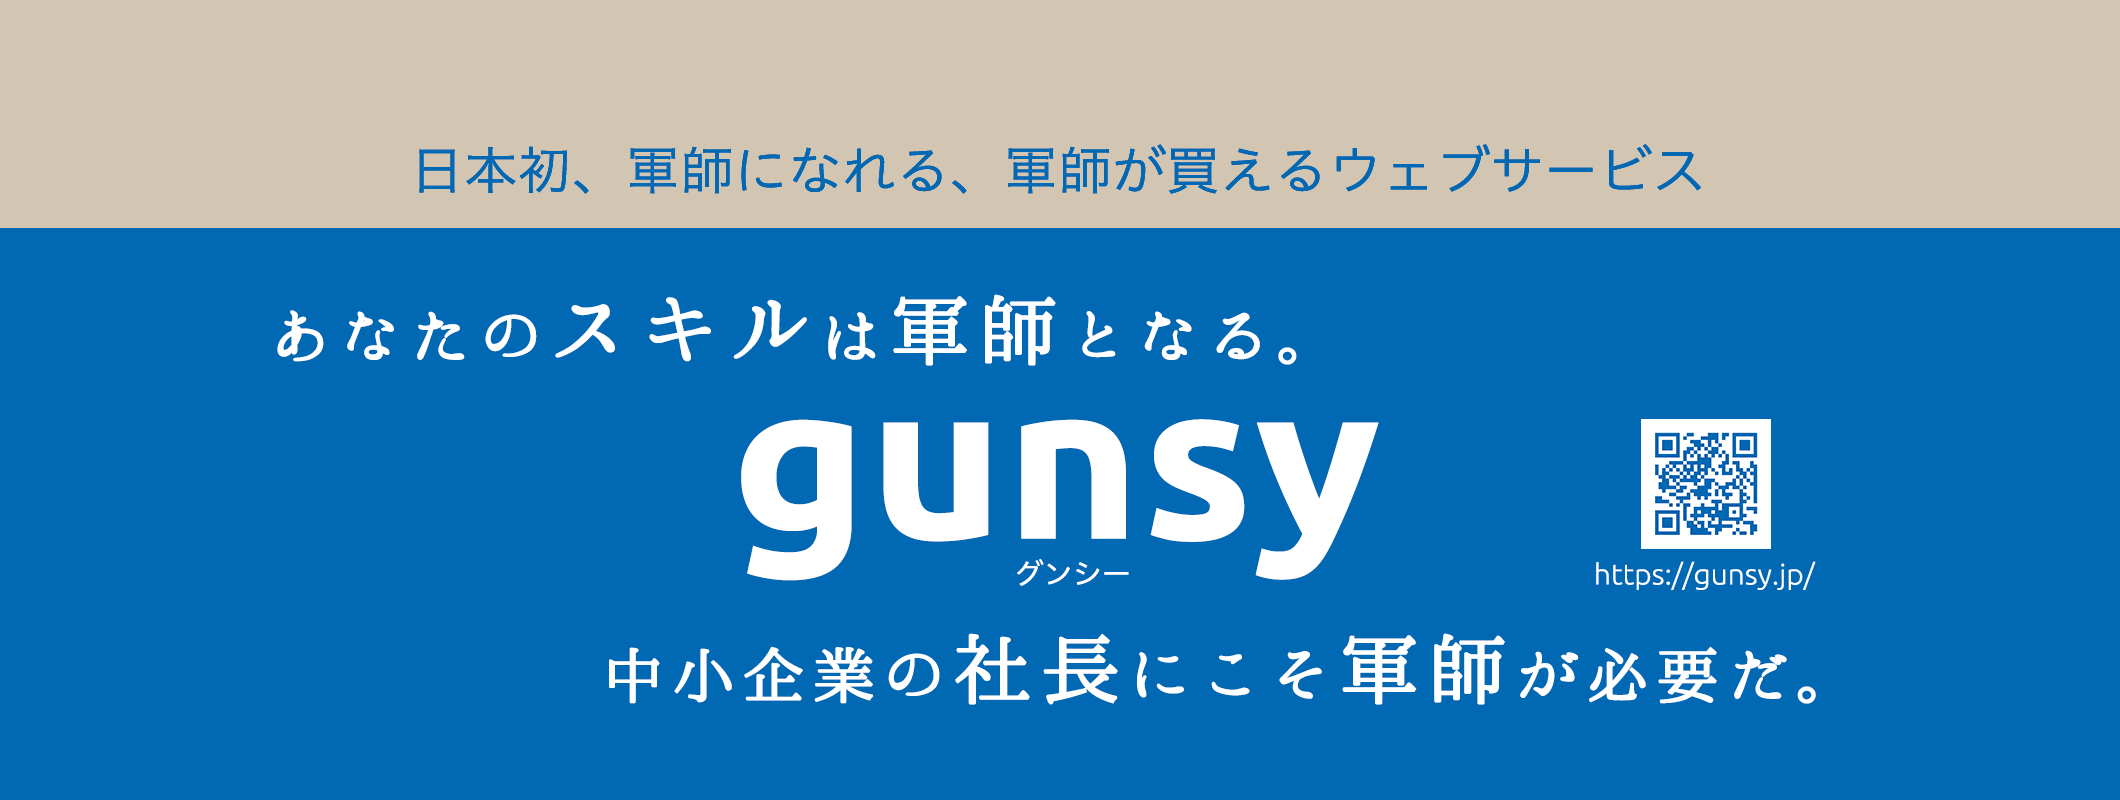 gunsy（グンシー）は、軍師を売る買いできるウェブサービスです。